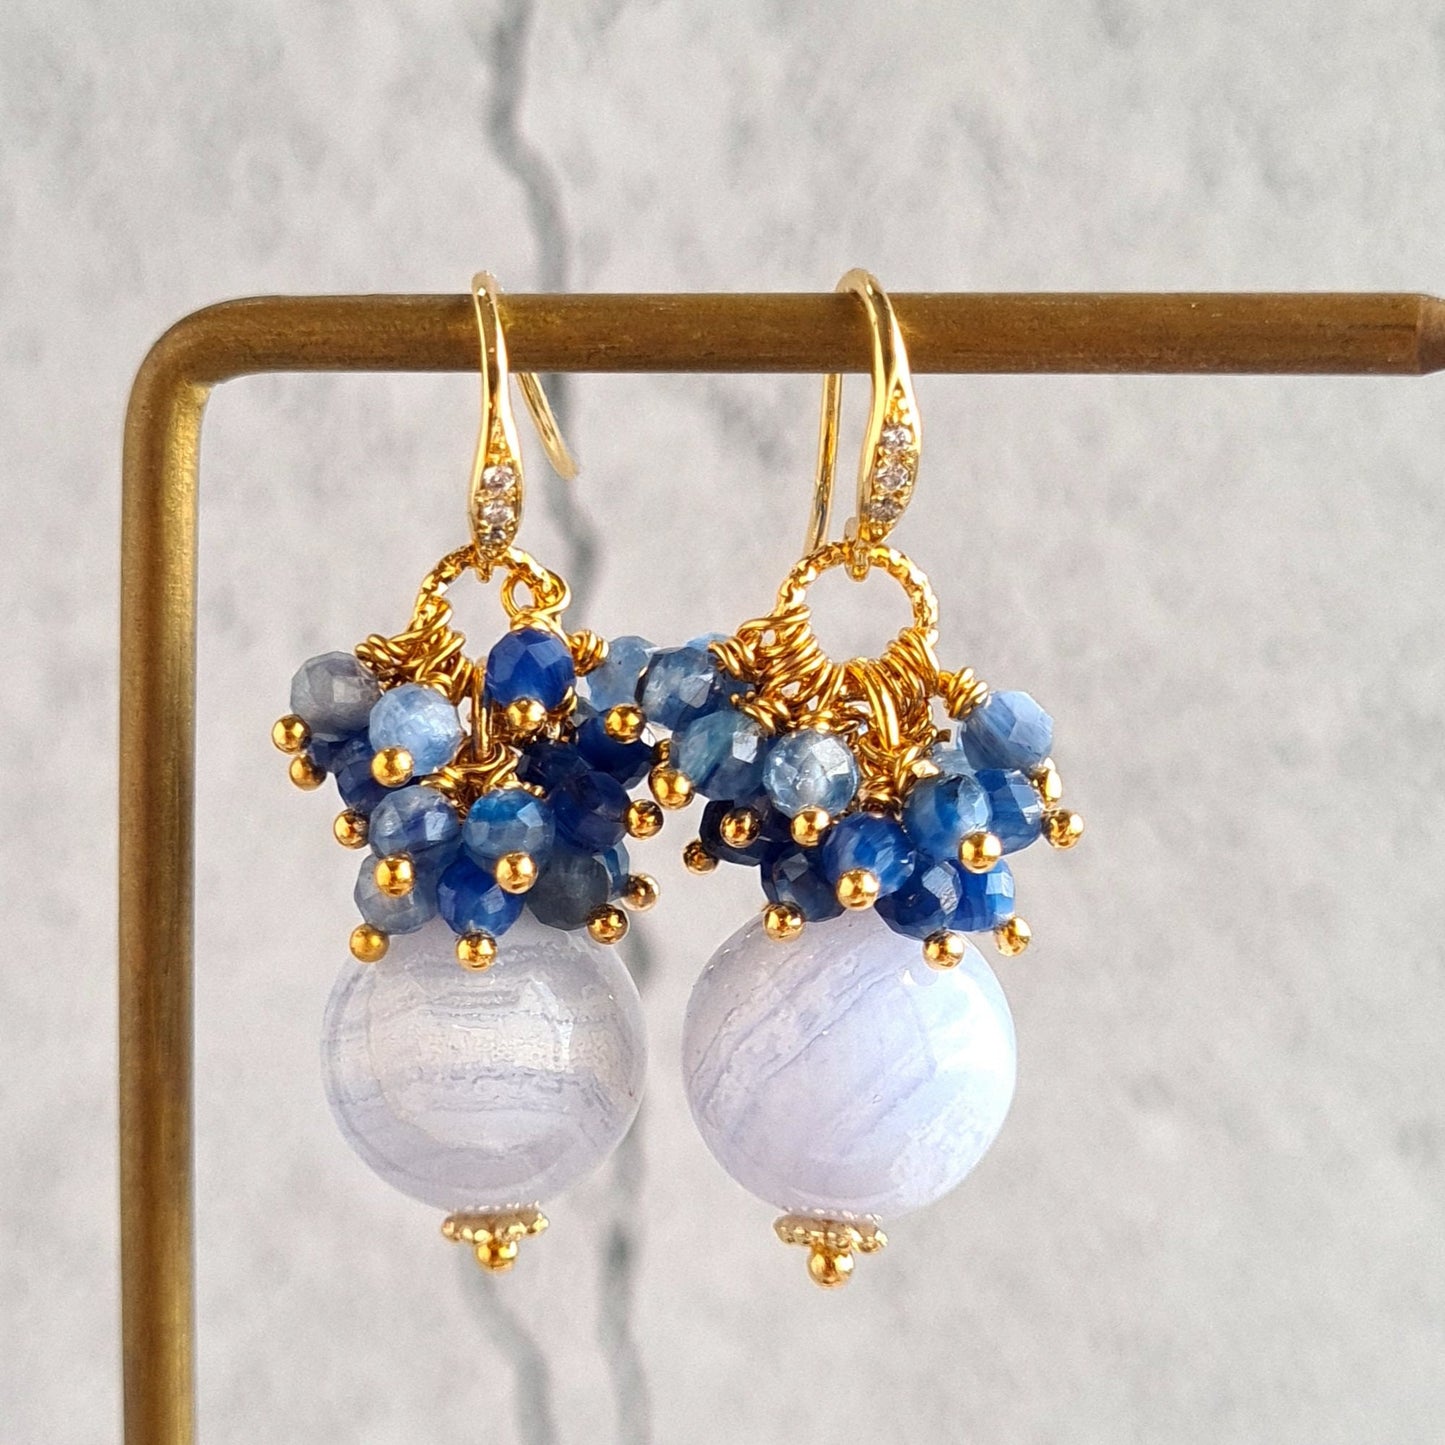 Blue Laca Agate with Kyanite Gemstone Cluster Earrings, Pendant, Necklace Set